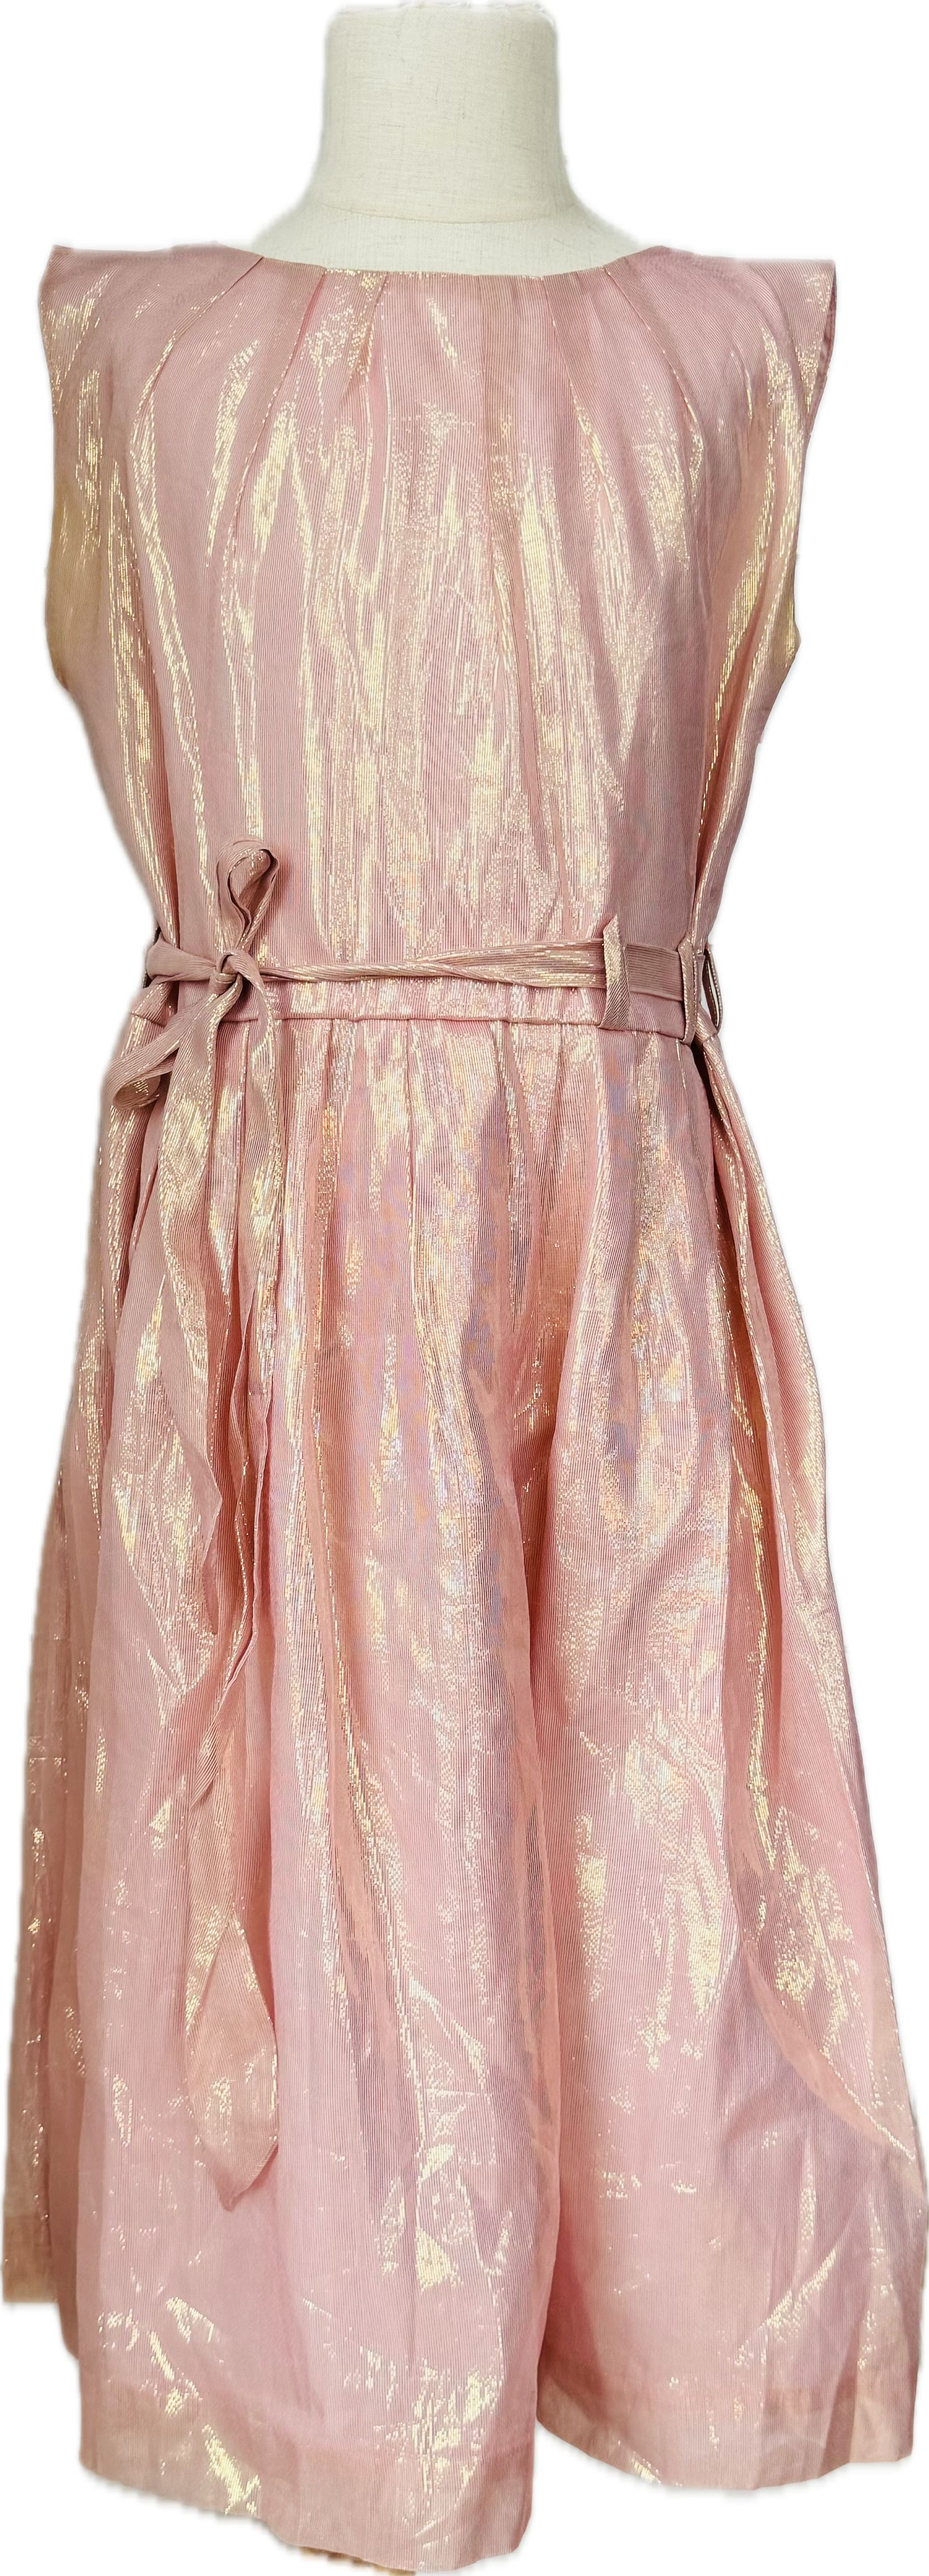 Rachel Riley Shimmer Dress, Rose Gold Girls Size 12